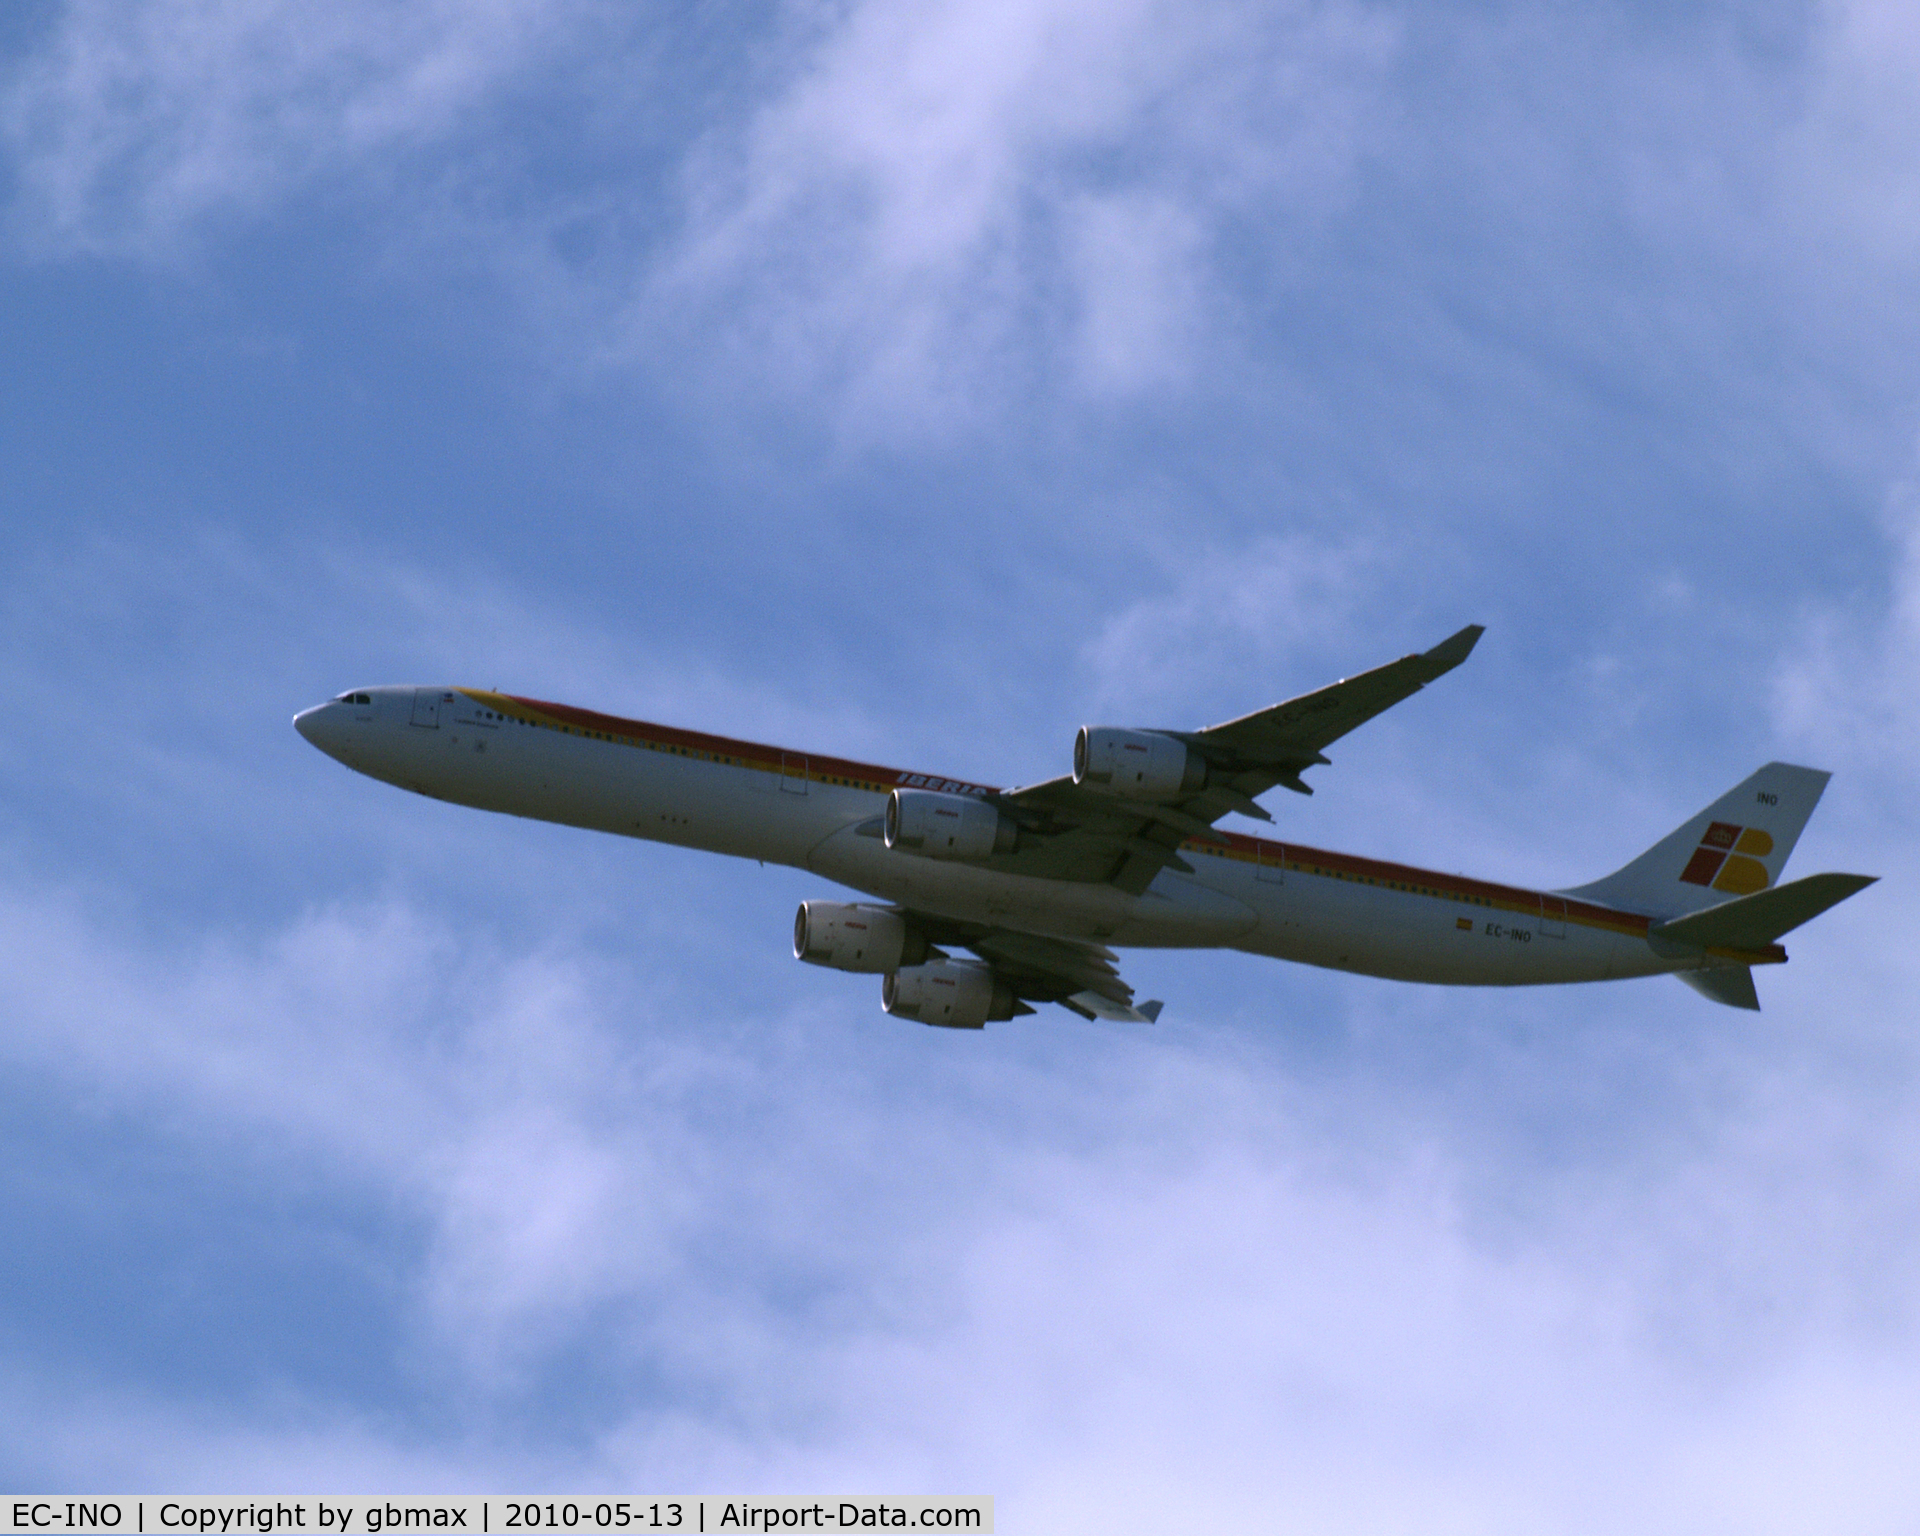 EC-INO, 2003 Airbus A340-642 C/N 431, Flying @ ~3,500 feet high, going to a landing at JFK